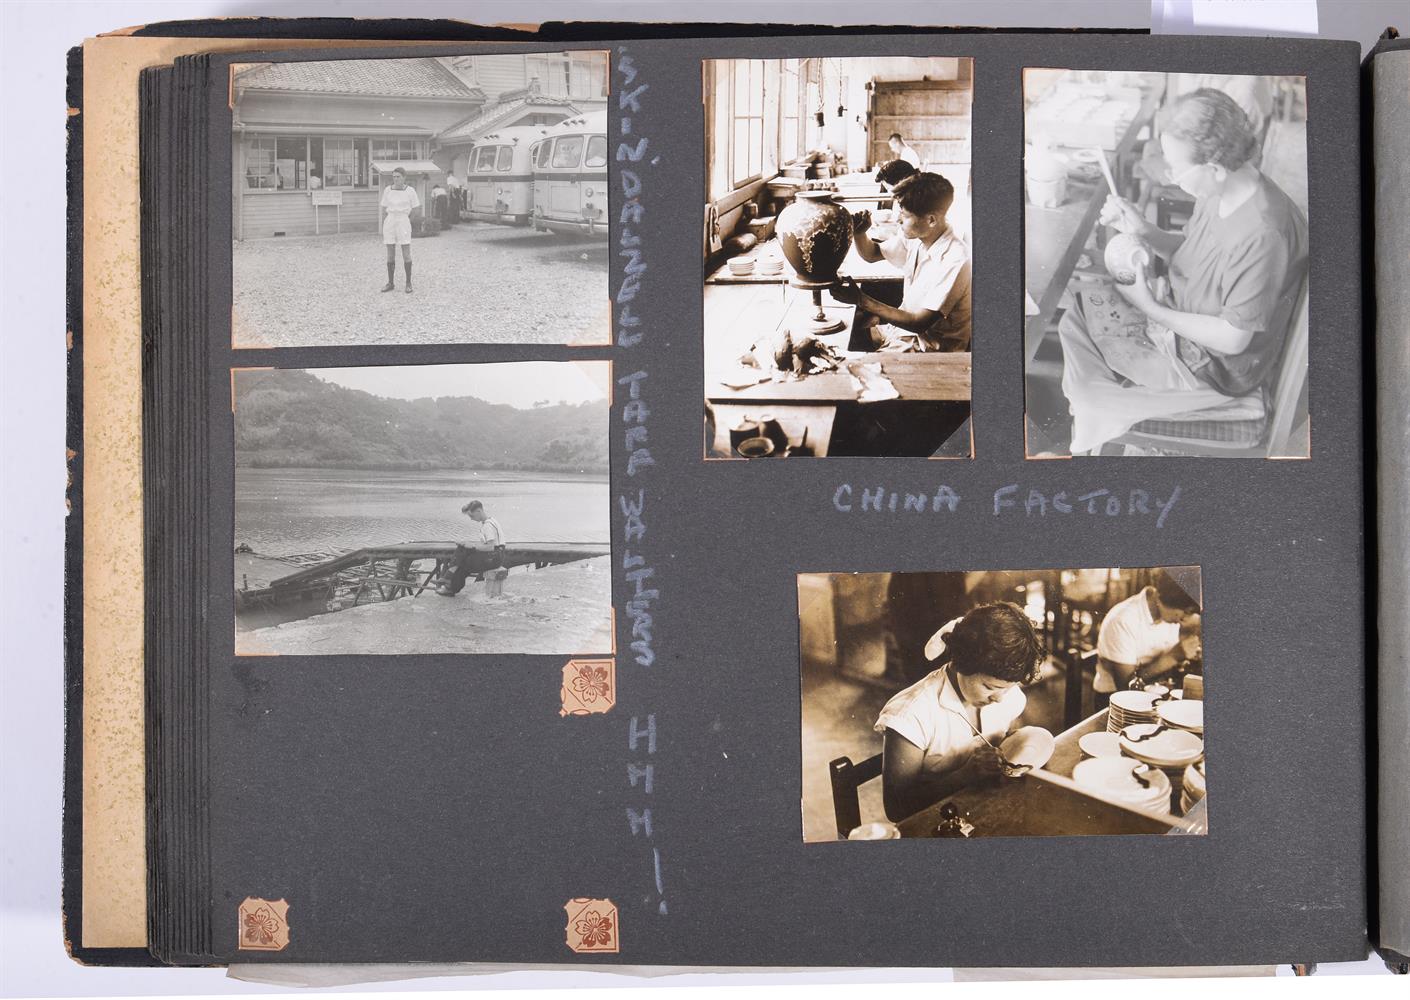 ALBUM: An album of over 100 photographs, Malta, Yemen, Hong Kong, Korea, (1951-53).